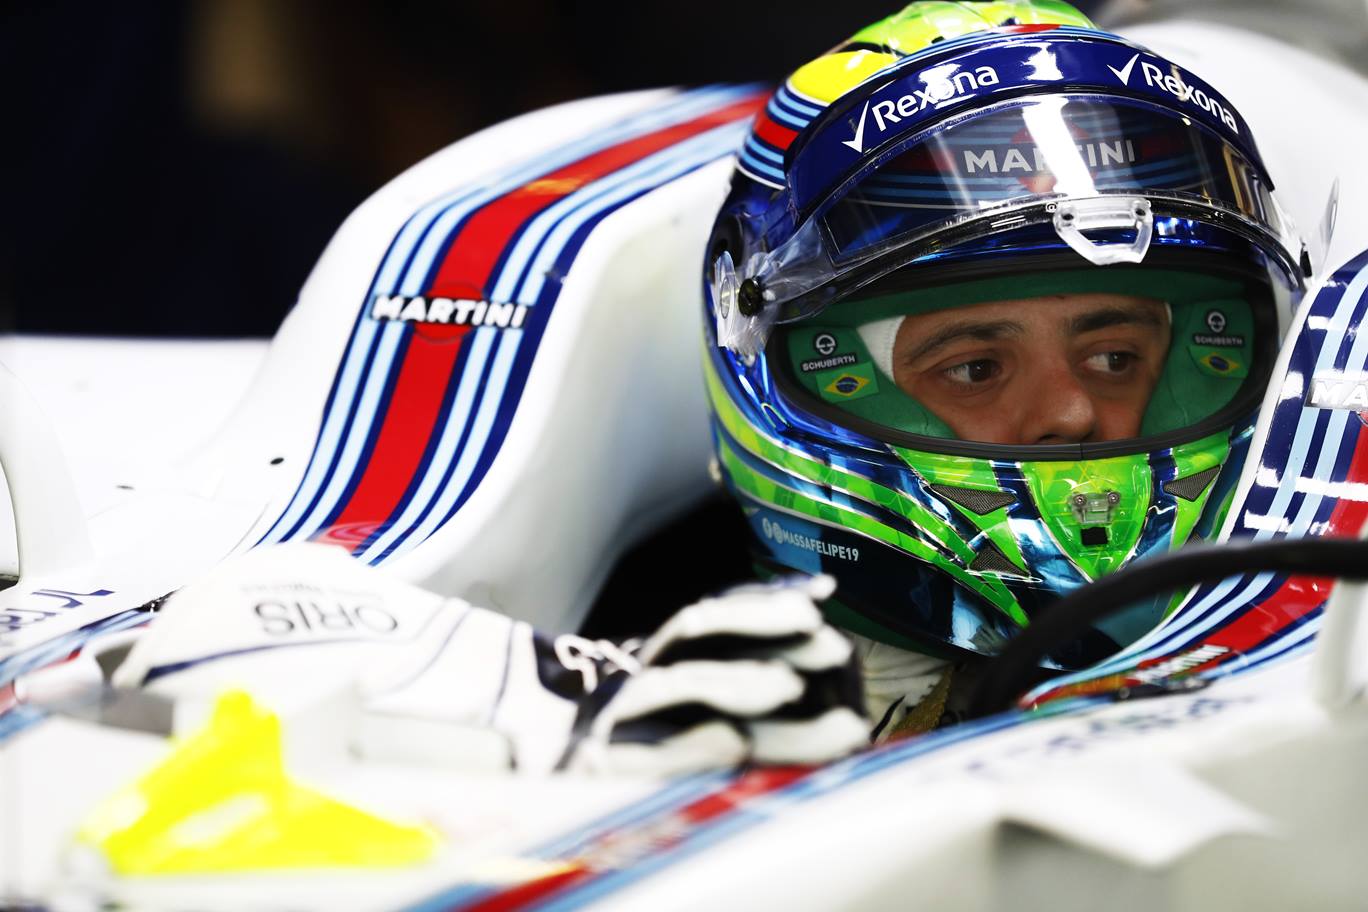 Massa leads FP3 on a soaked track | FormulaRapida.net